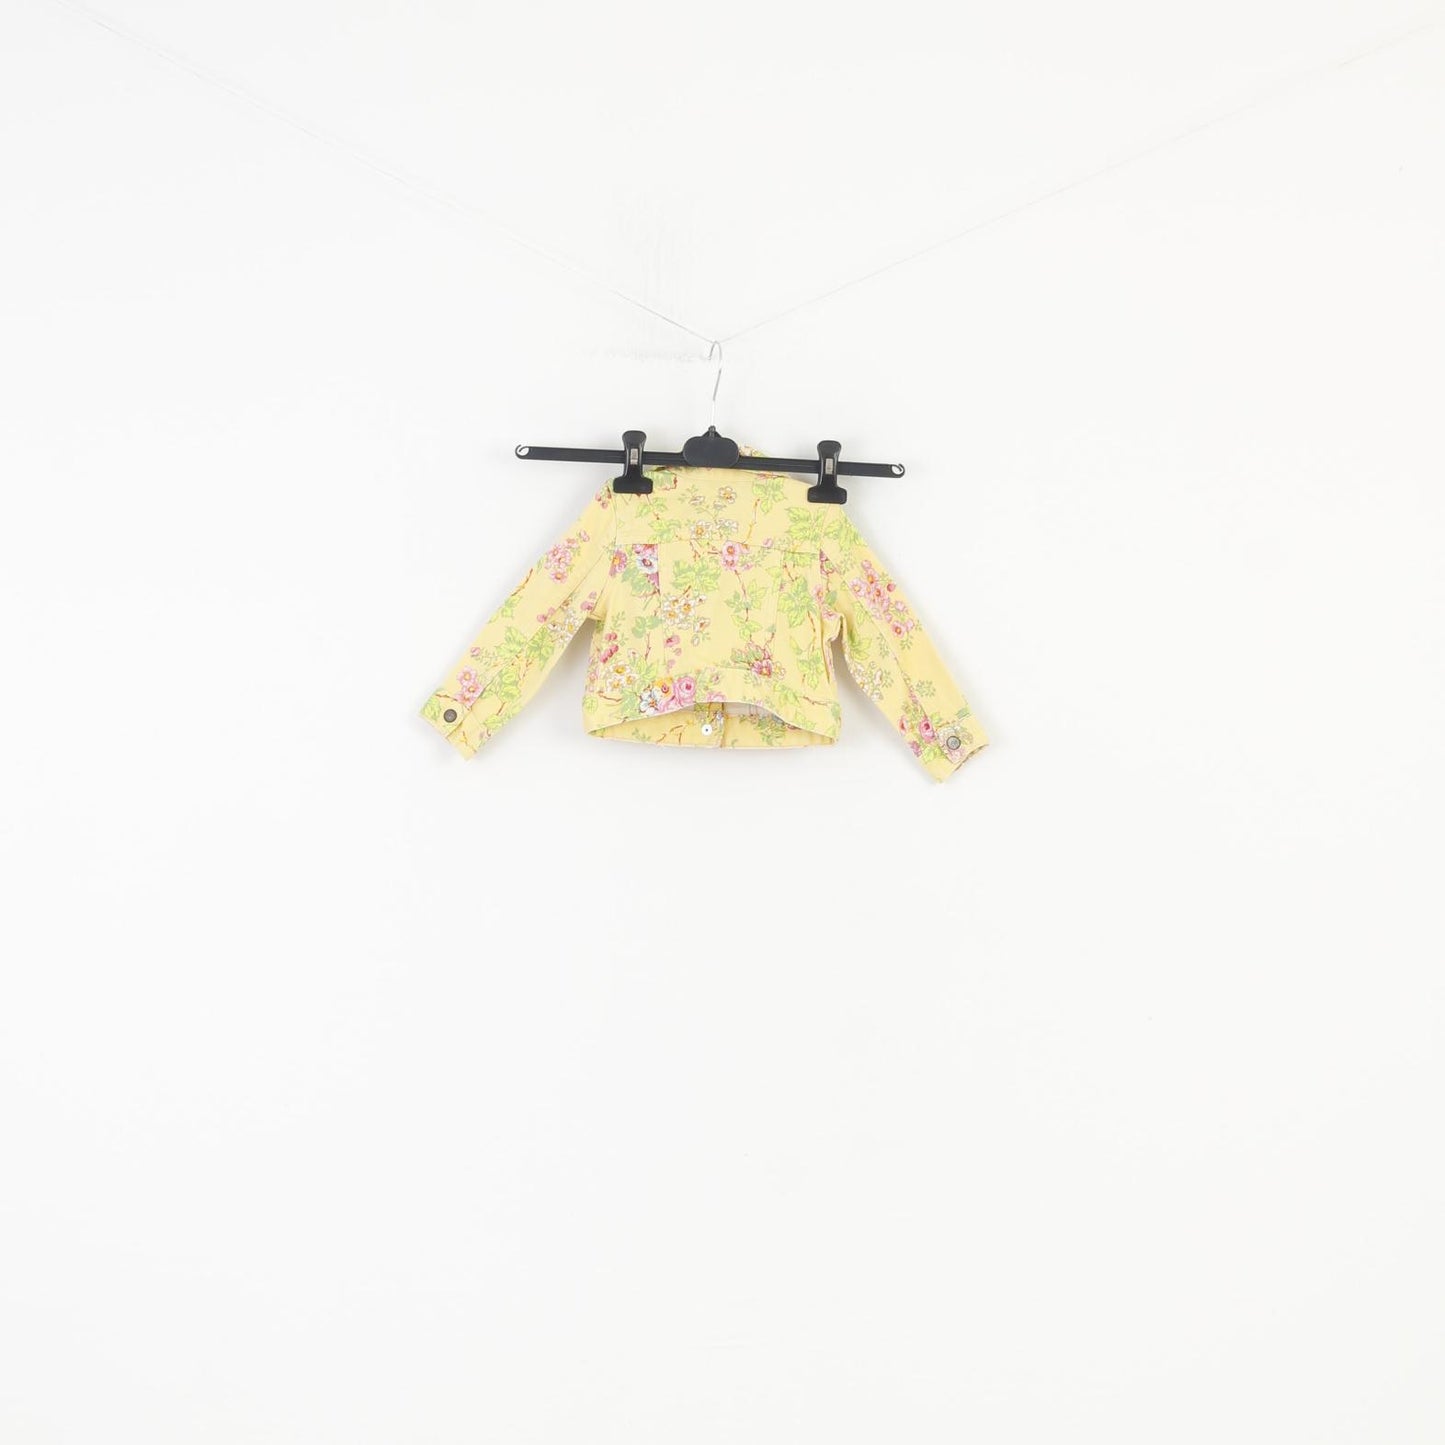 Giacca Ralph Lauren da bambina 18 mesi in cotone con bottoni automatici a fiore giallo